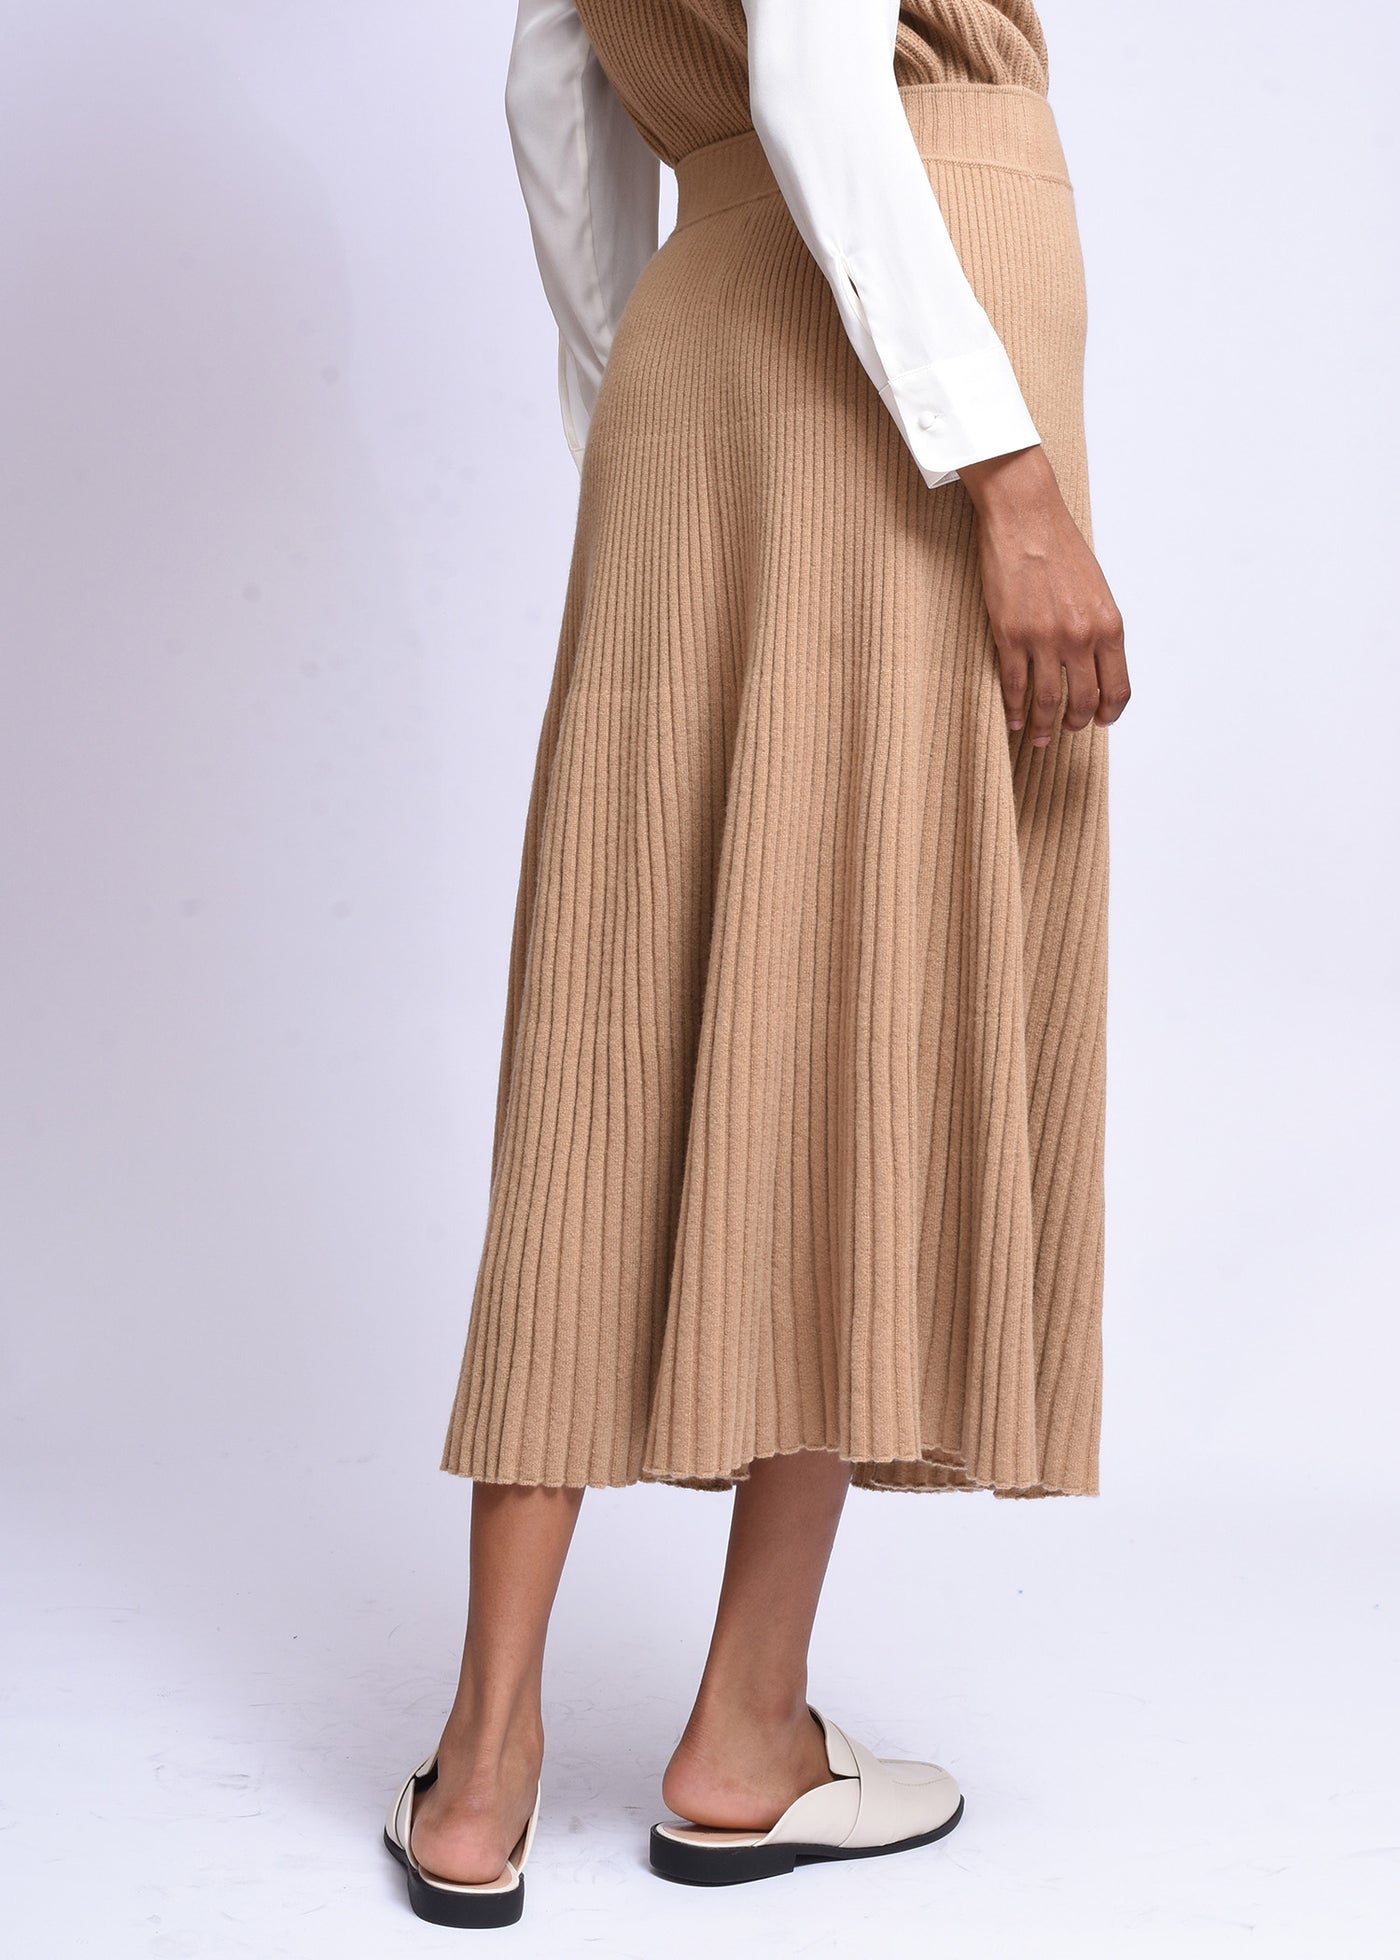 Women's Rib Knit Cashmere Skirt